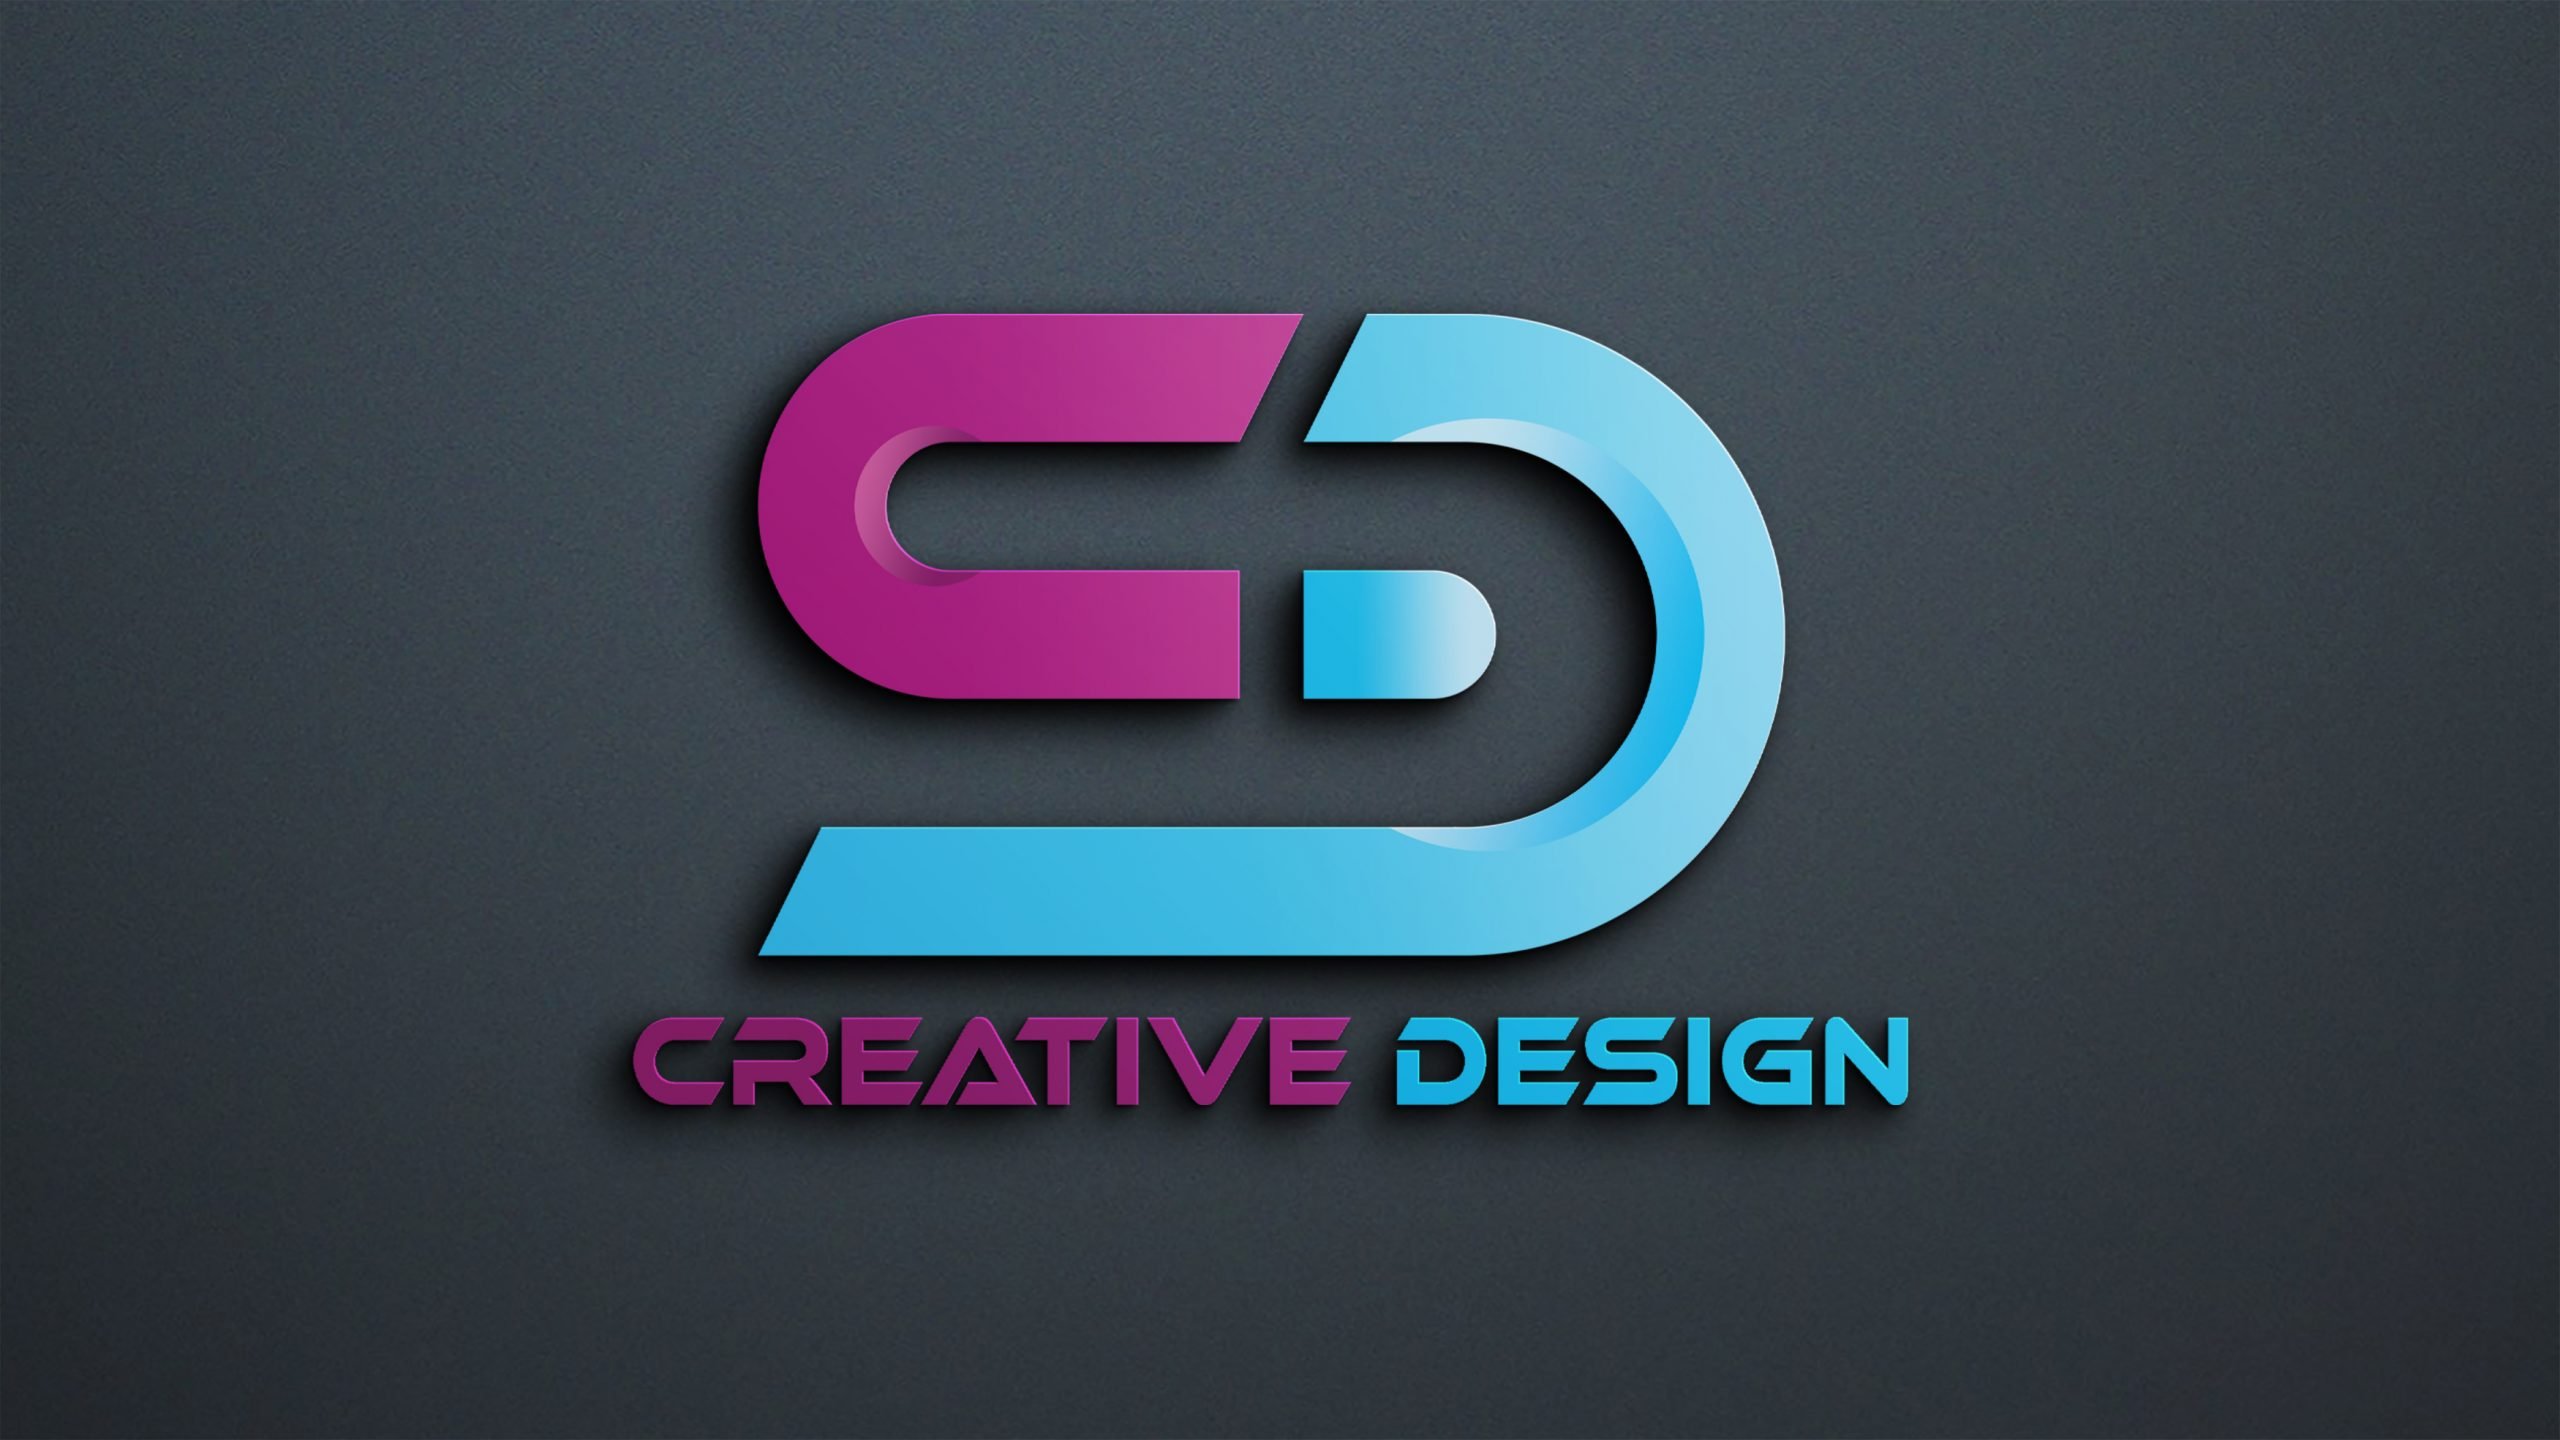 how to design a logo online free